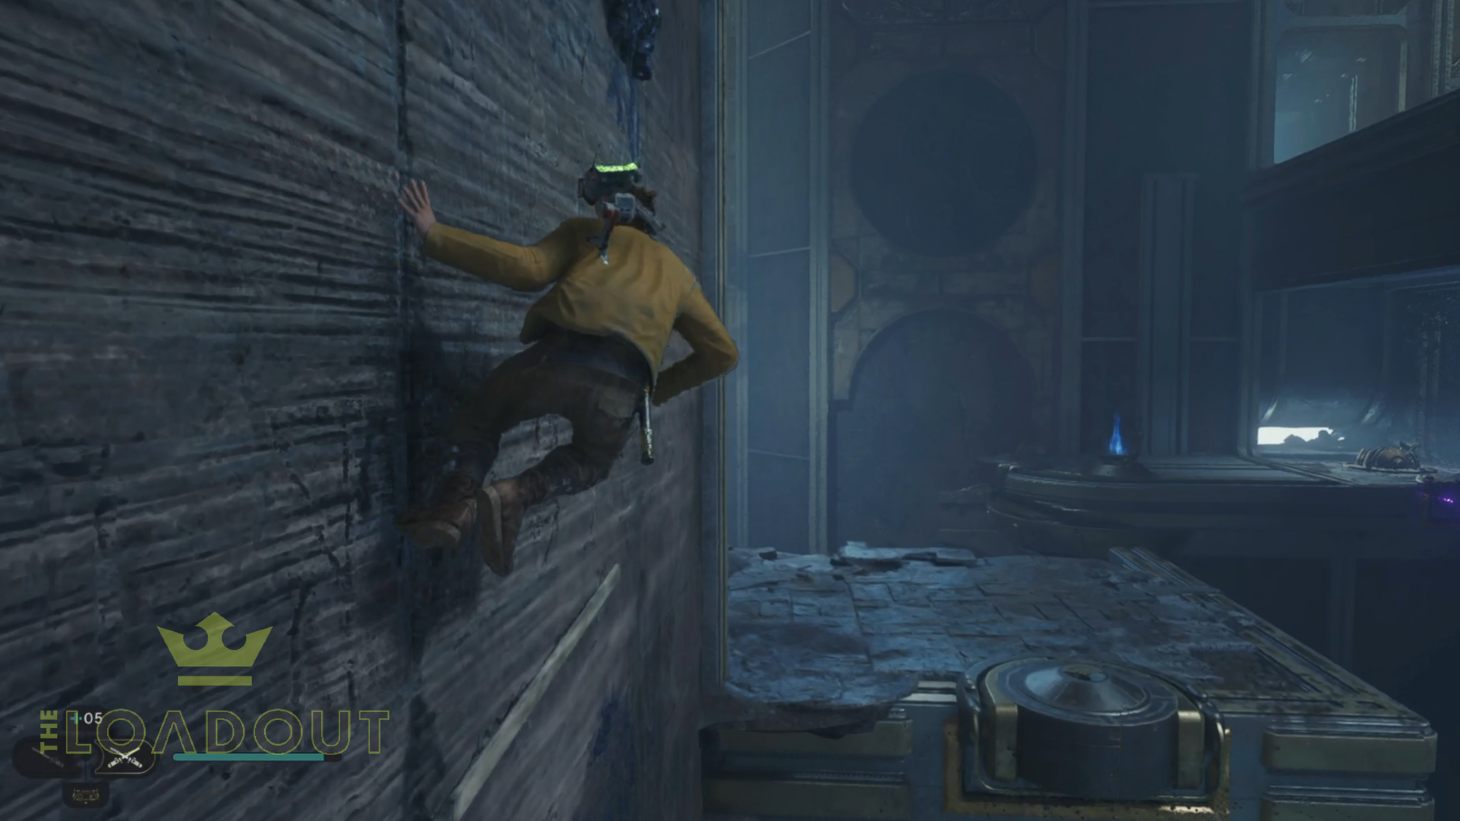 Star Wars Jedi Survivor Chamber of Reason: Cal can be seen wall running